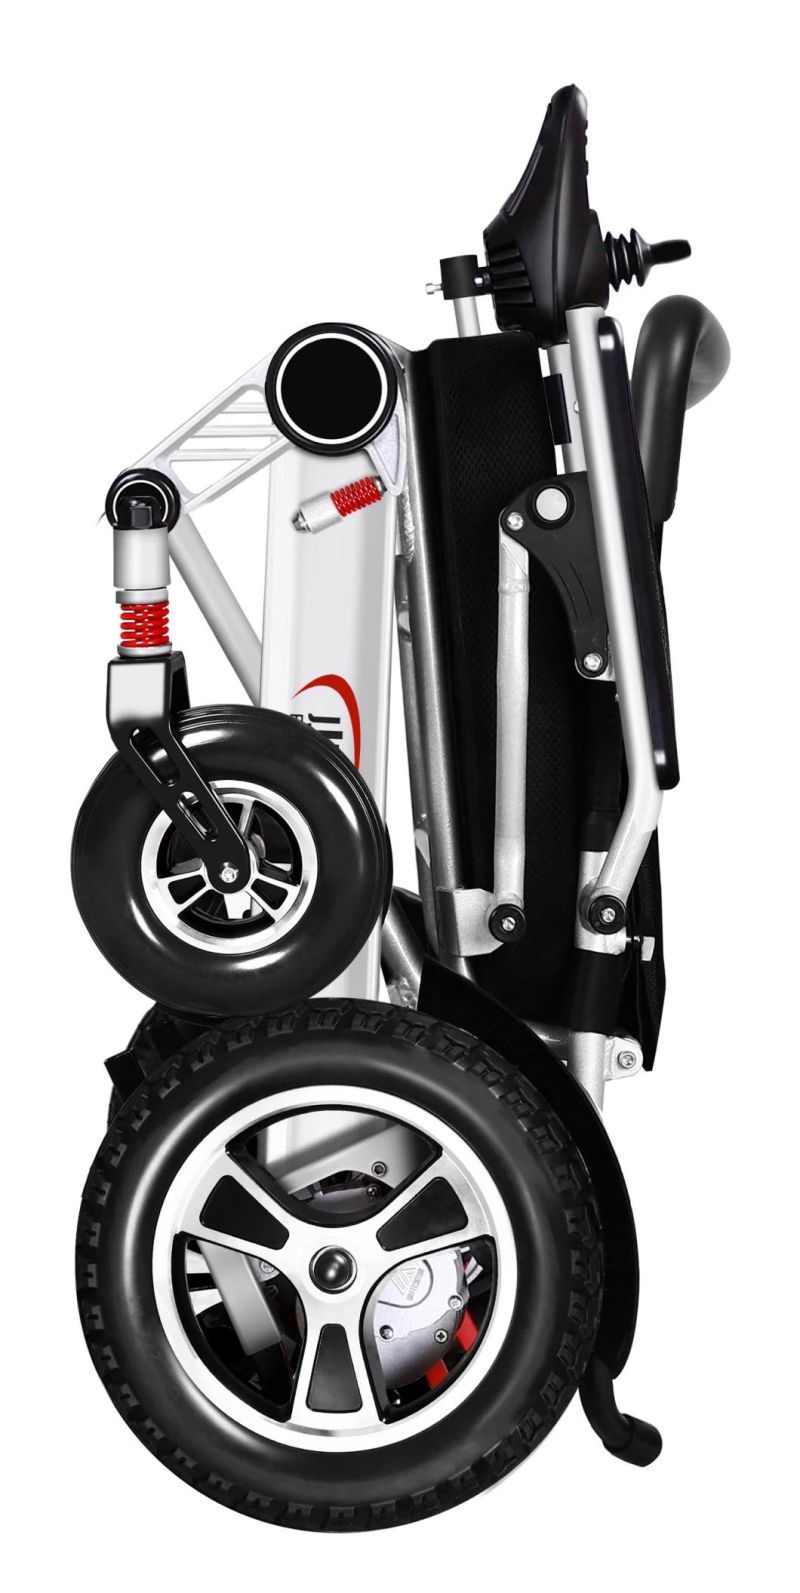 Foldable Lightweight All Terrain Premium Electric Wheelchair, Portable, Compact Folding Motorized Wheelchair